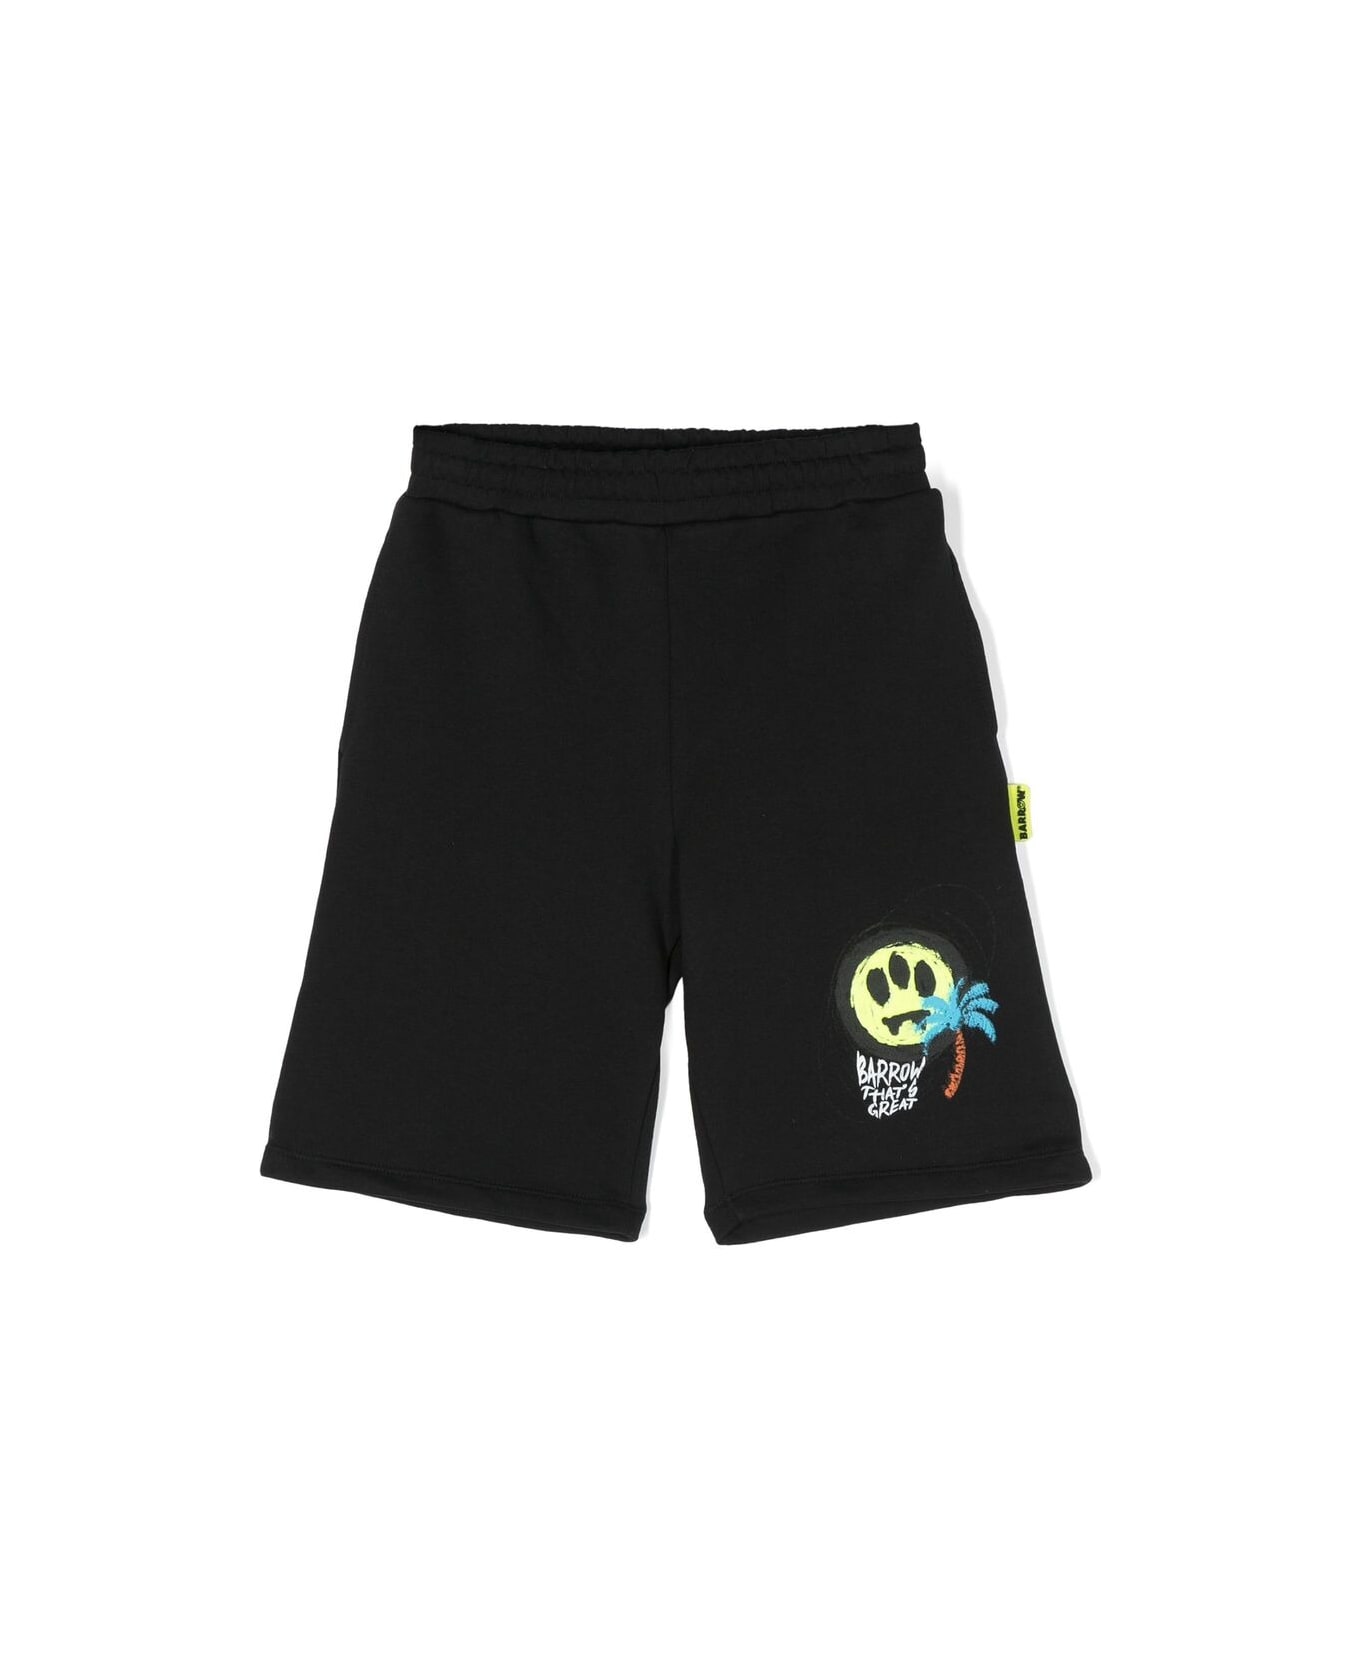 Barrow Black Shorts With Logo And Graphics - Black